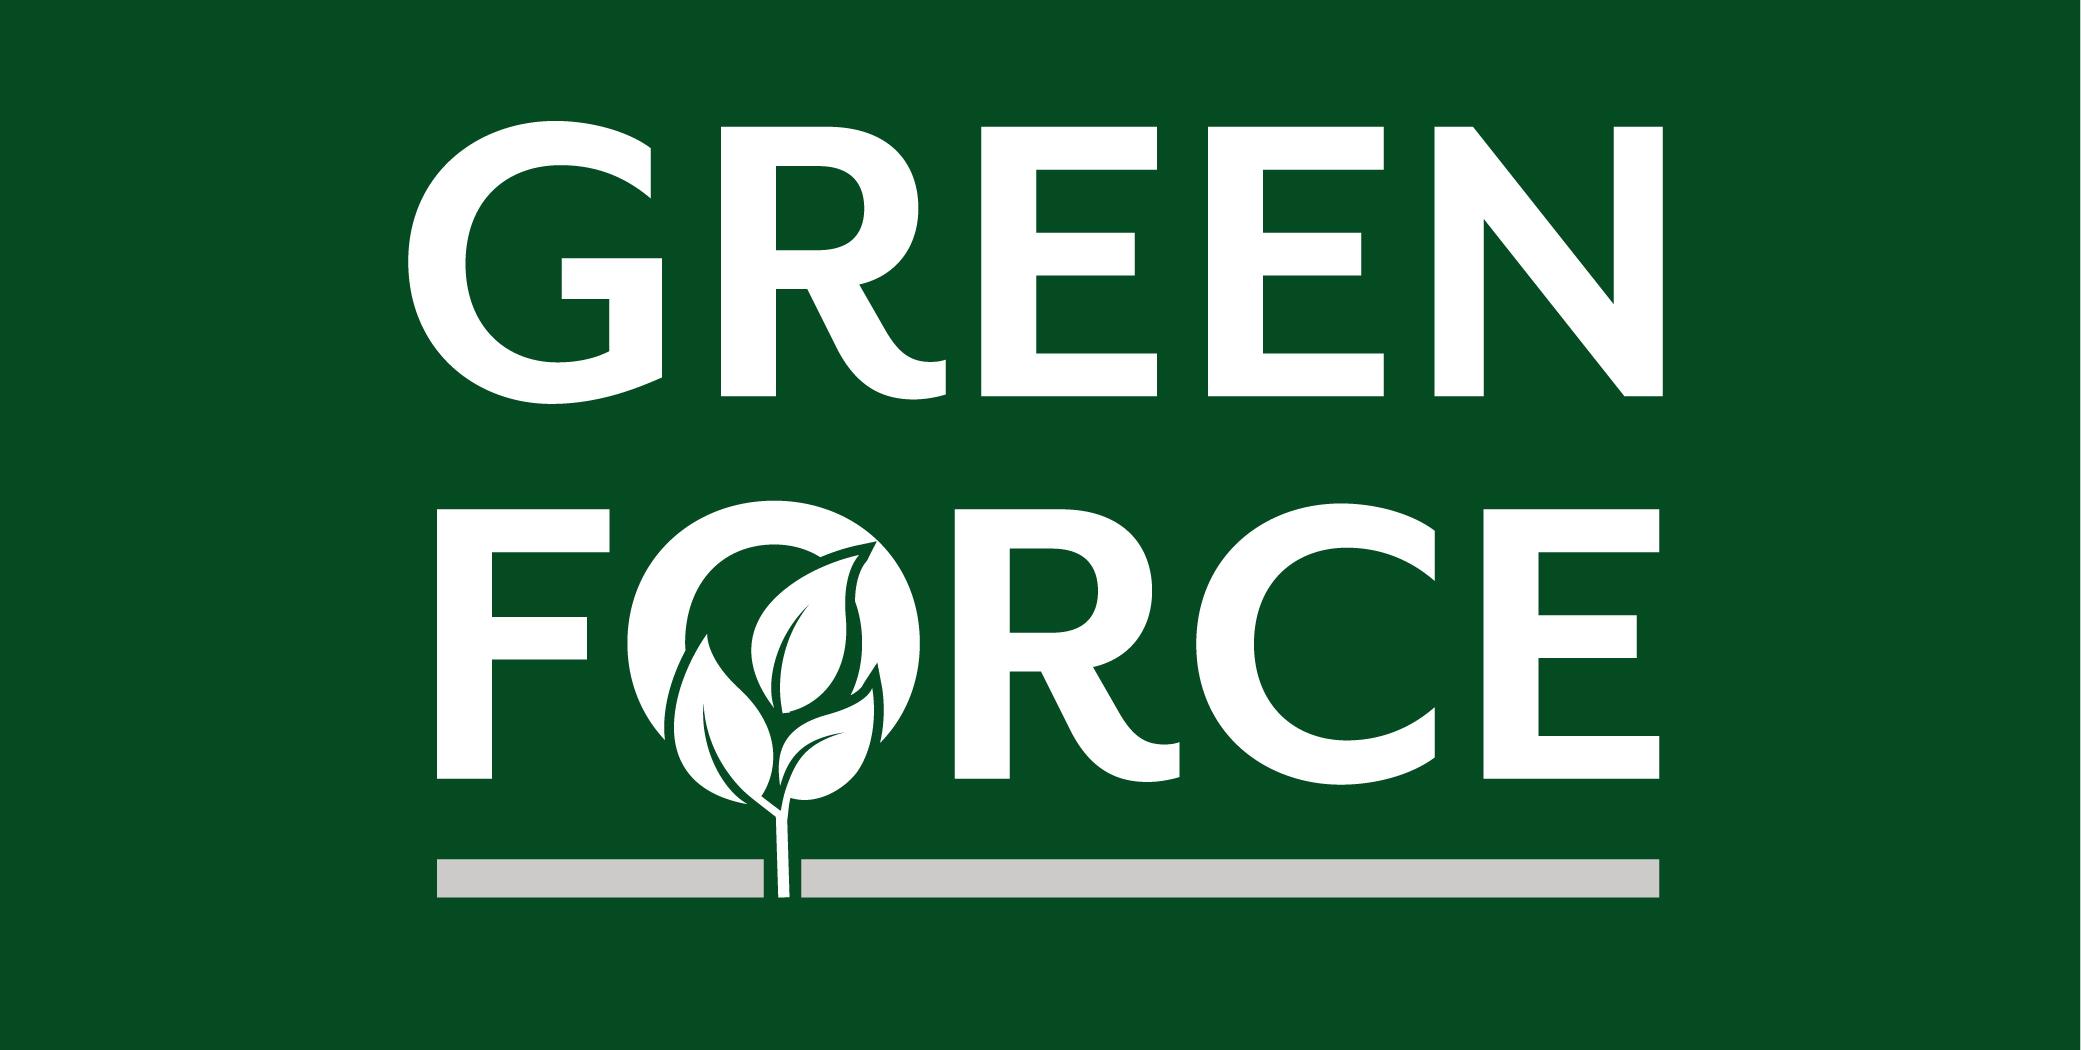 Greenforce Conference At Slo Botanical Garden 2 Feb 2020